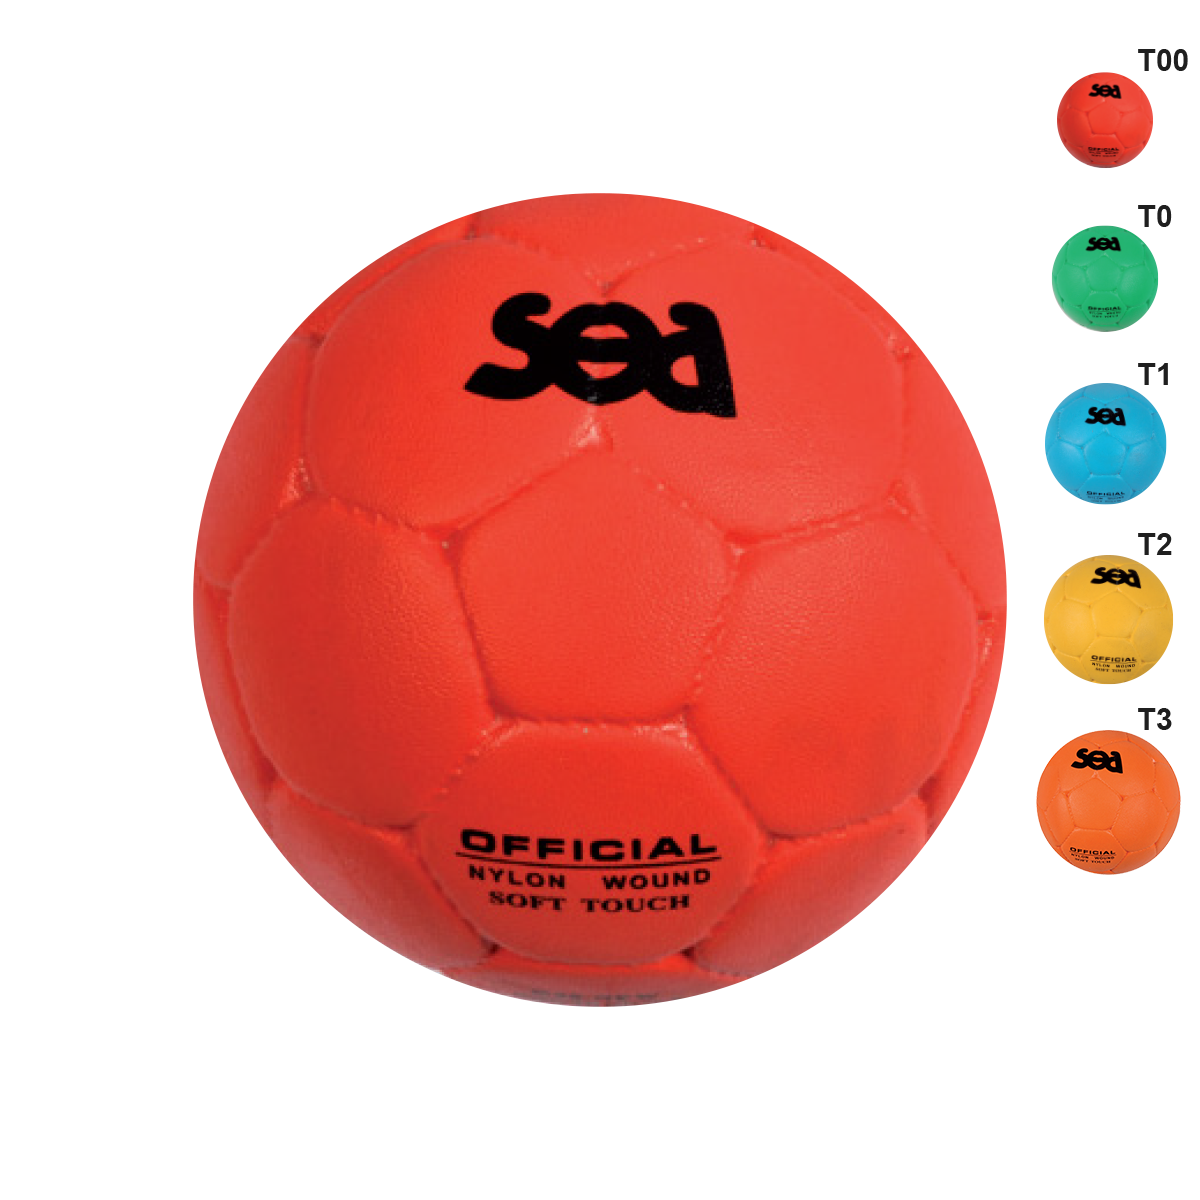 067232_SEA_ballon_de_handball_school_composite_sgequipement_sg_equipement